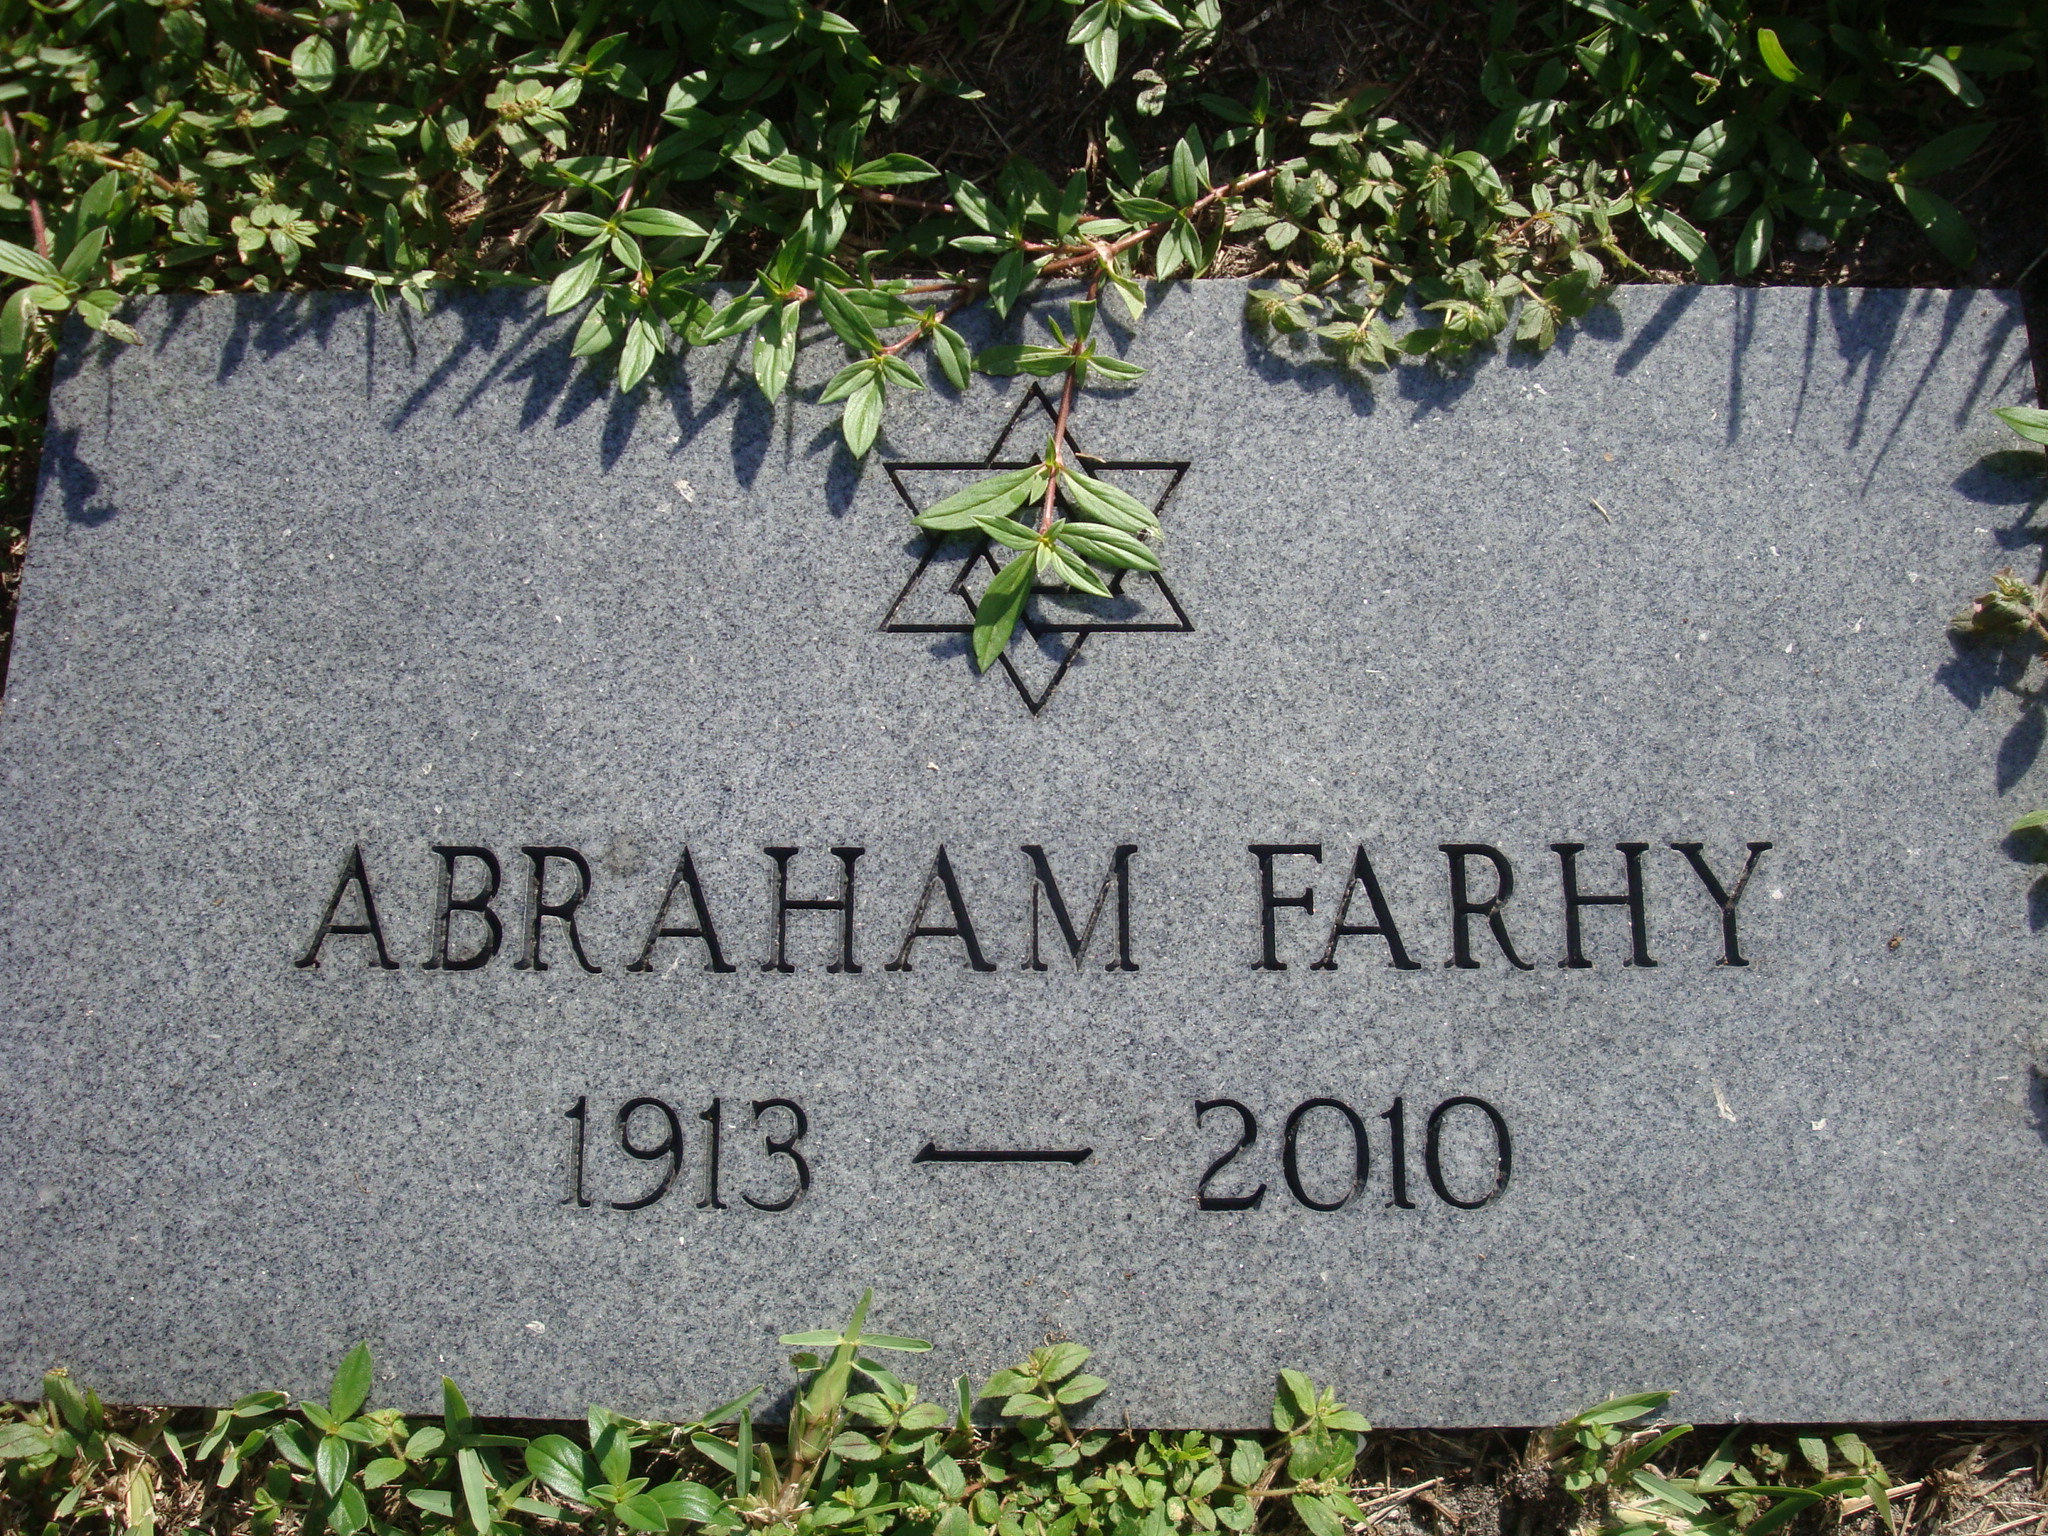 Abraham Farhy